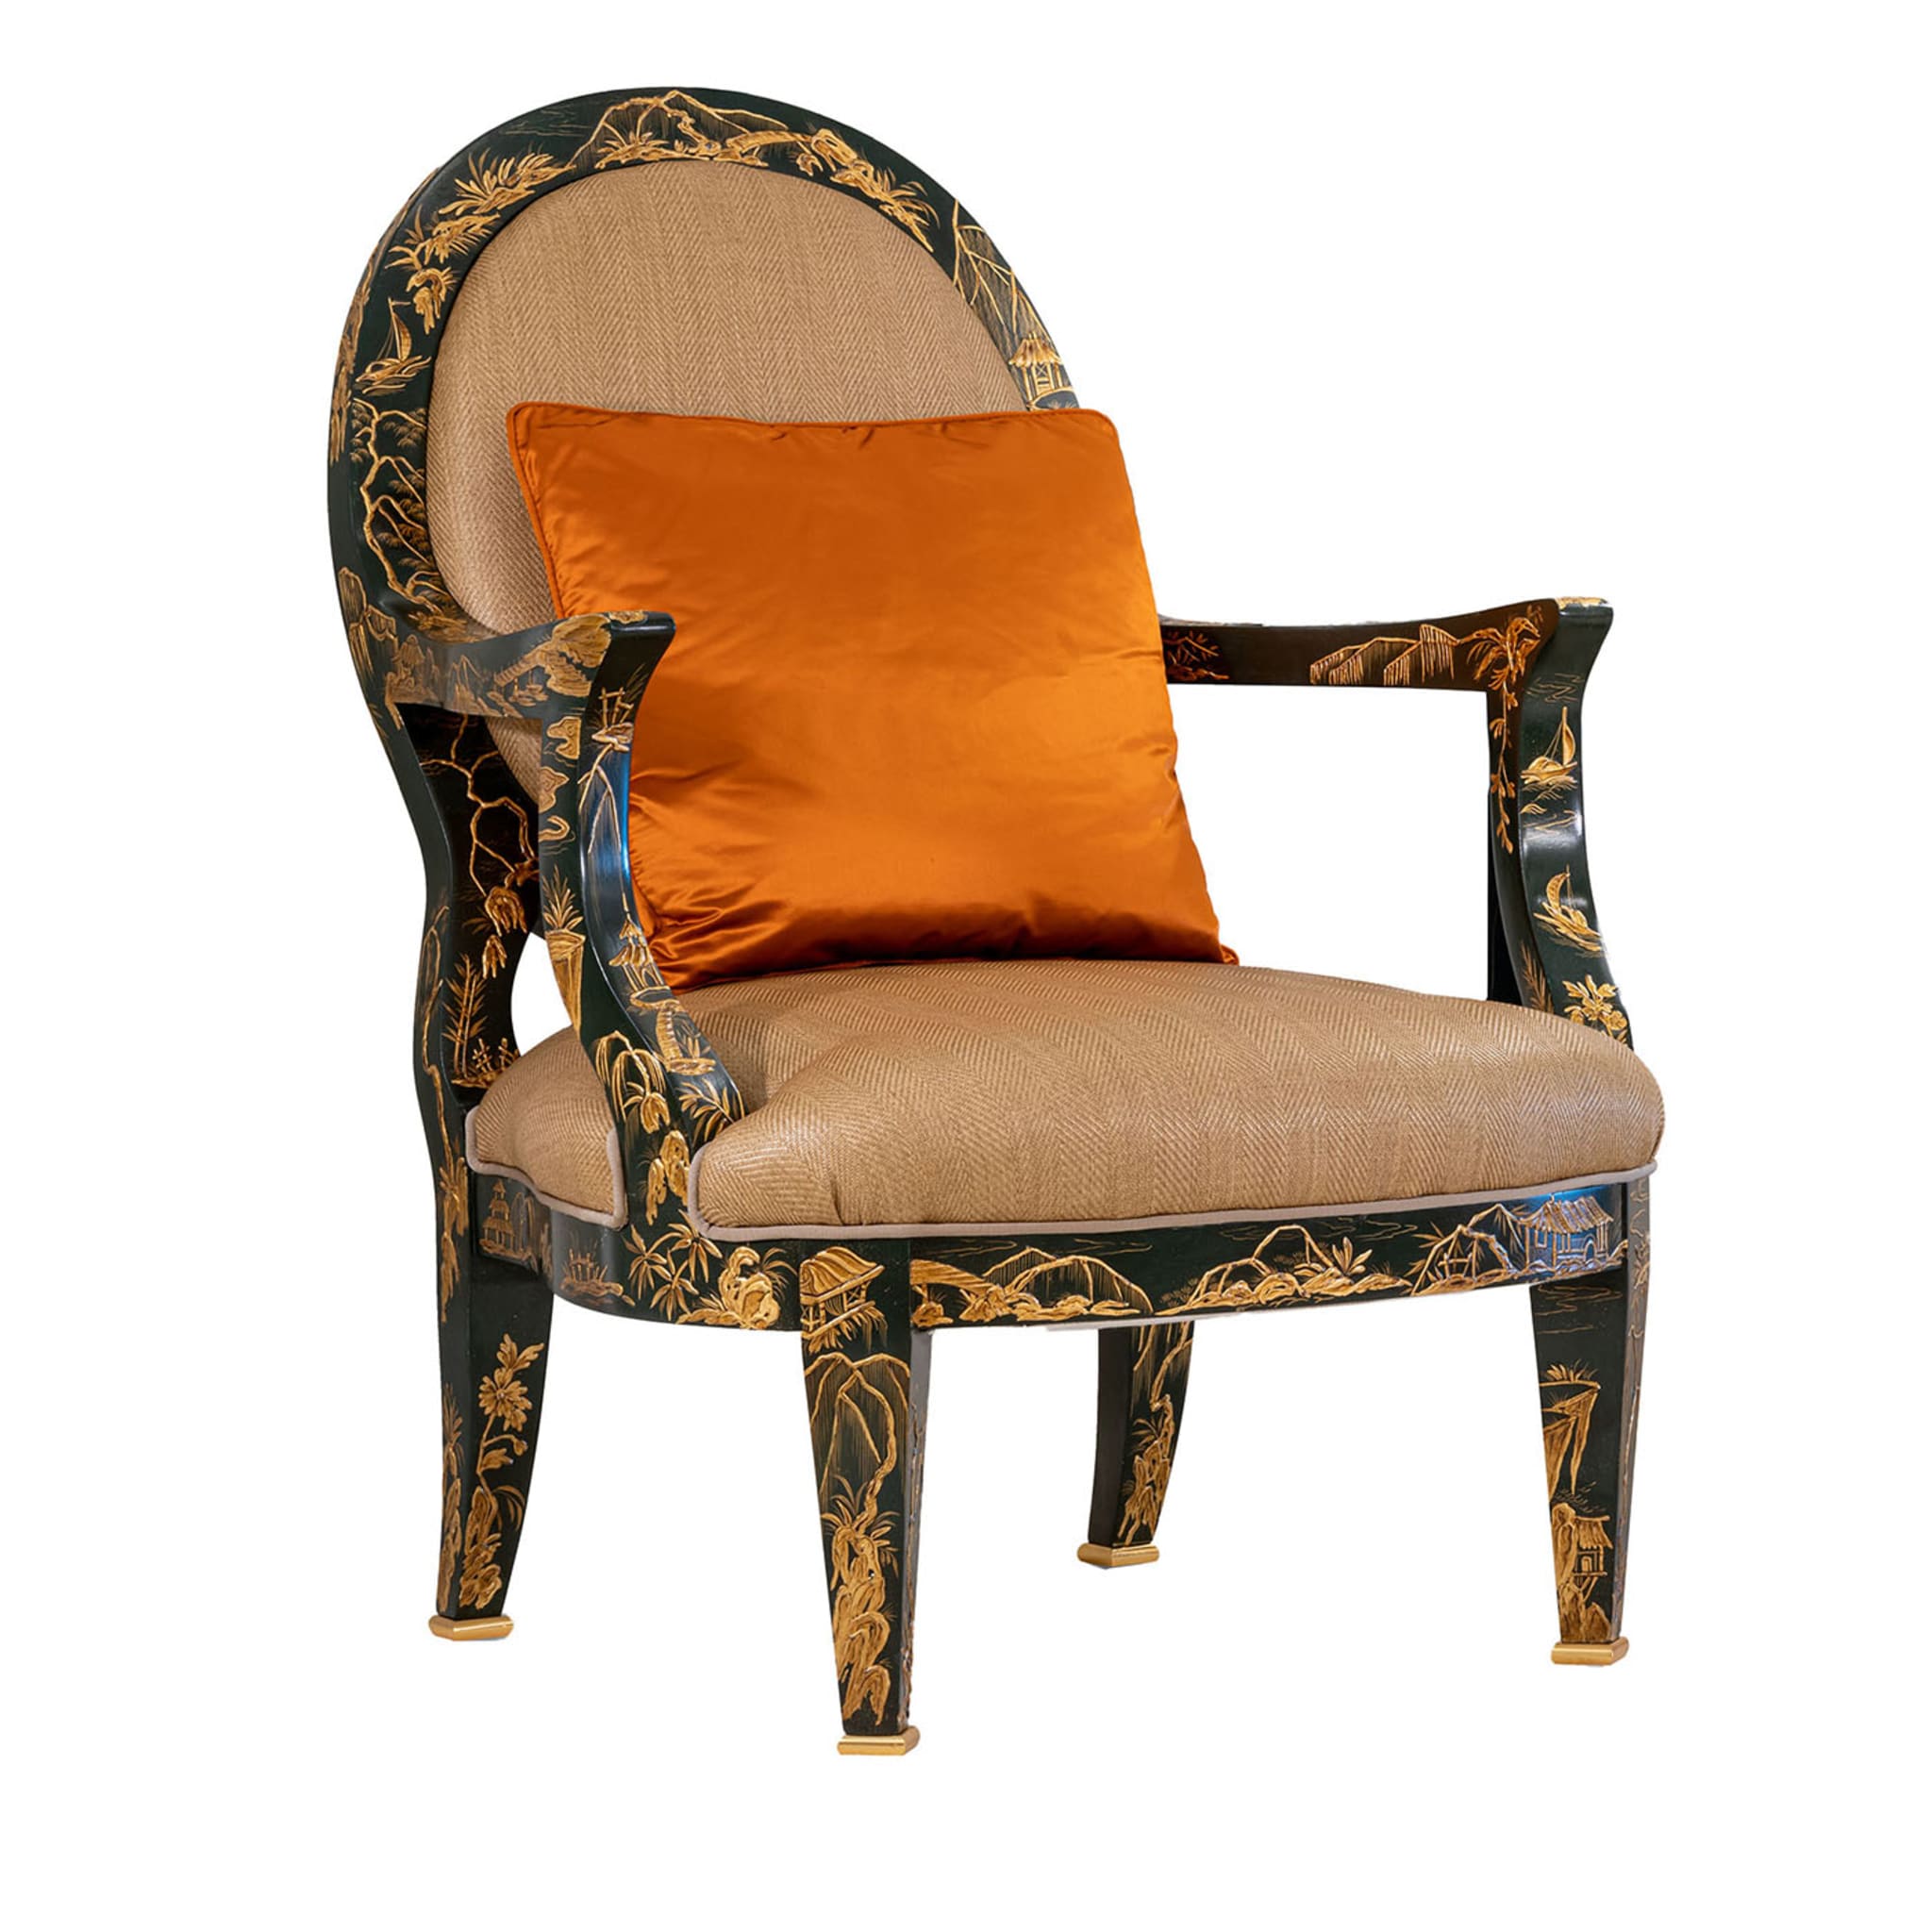 Dunkelgrüner und goldener Sessel im Deco-Stil  - Hauptansicht